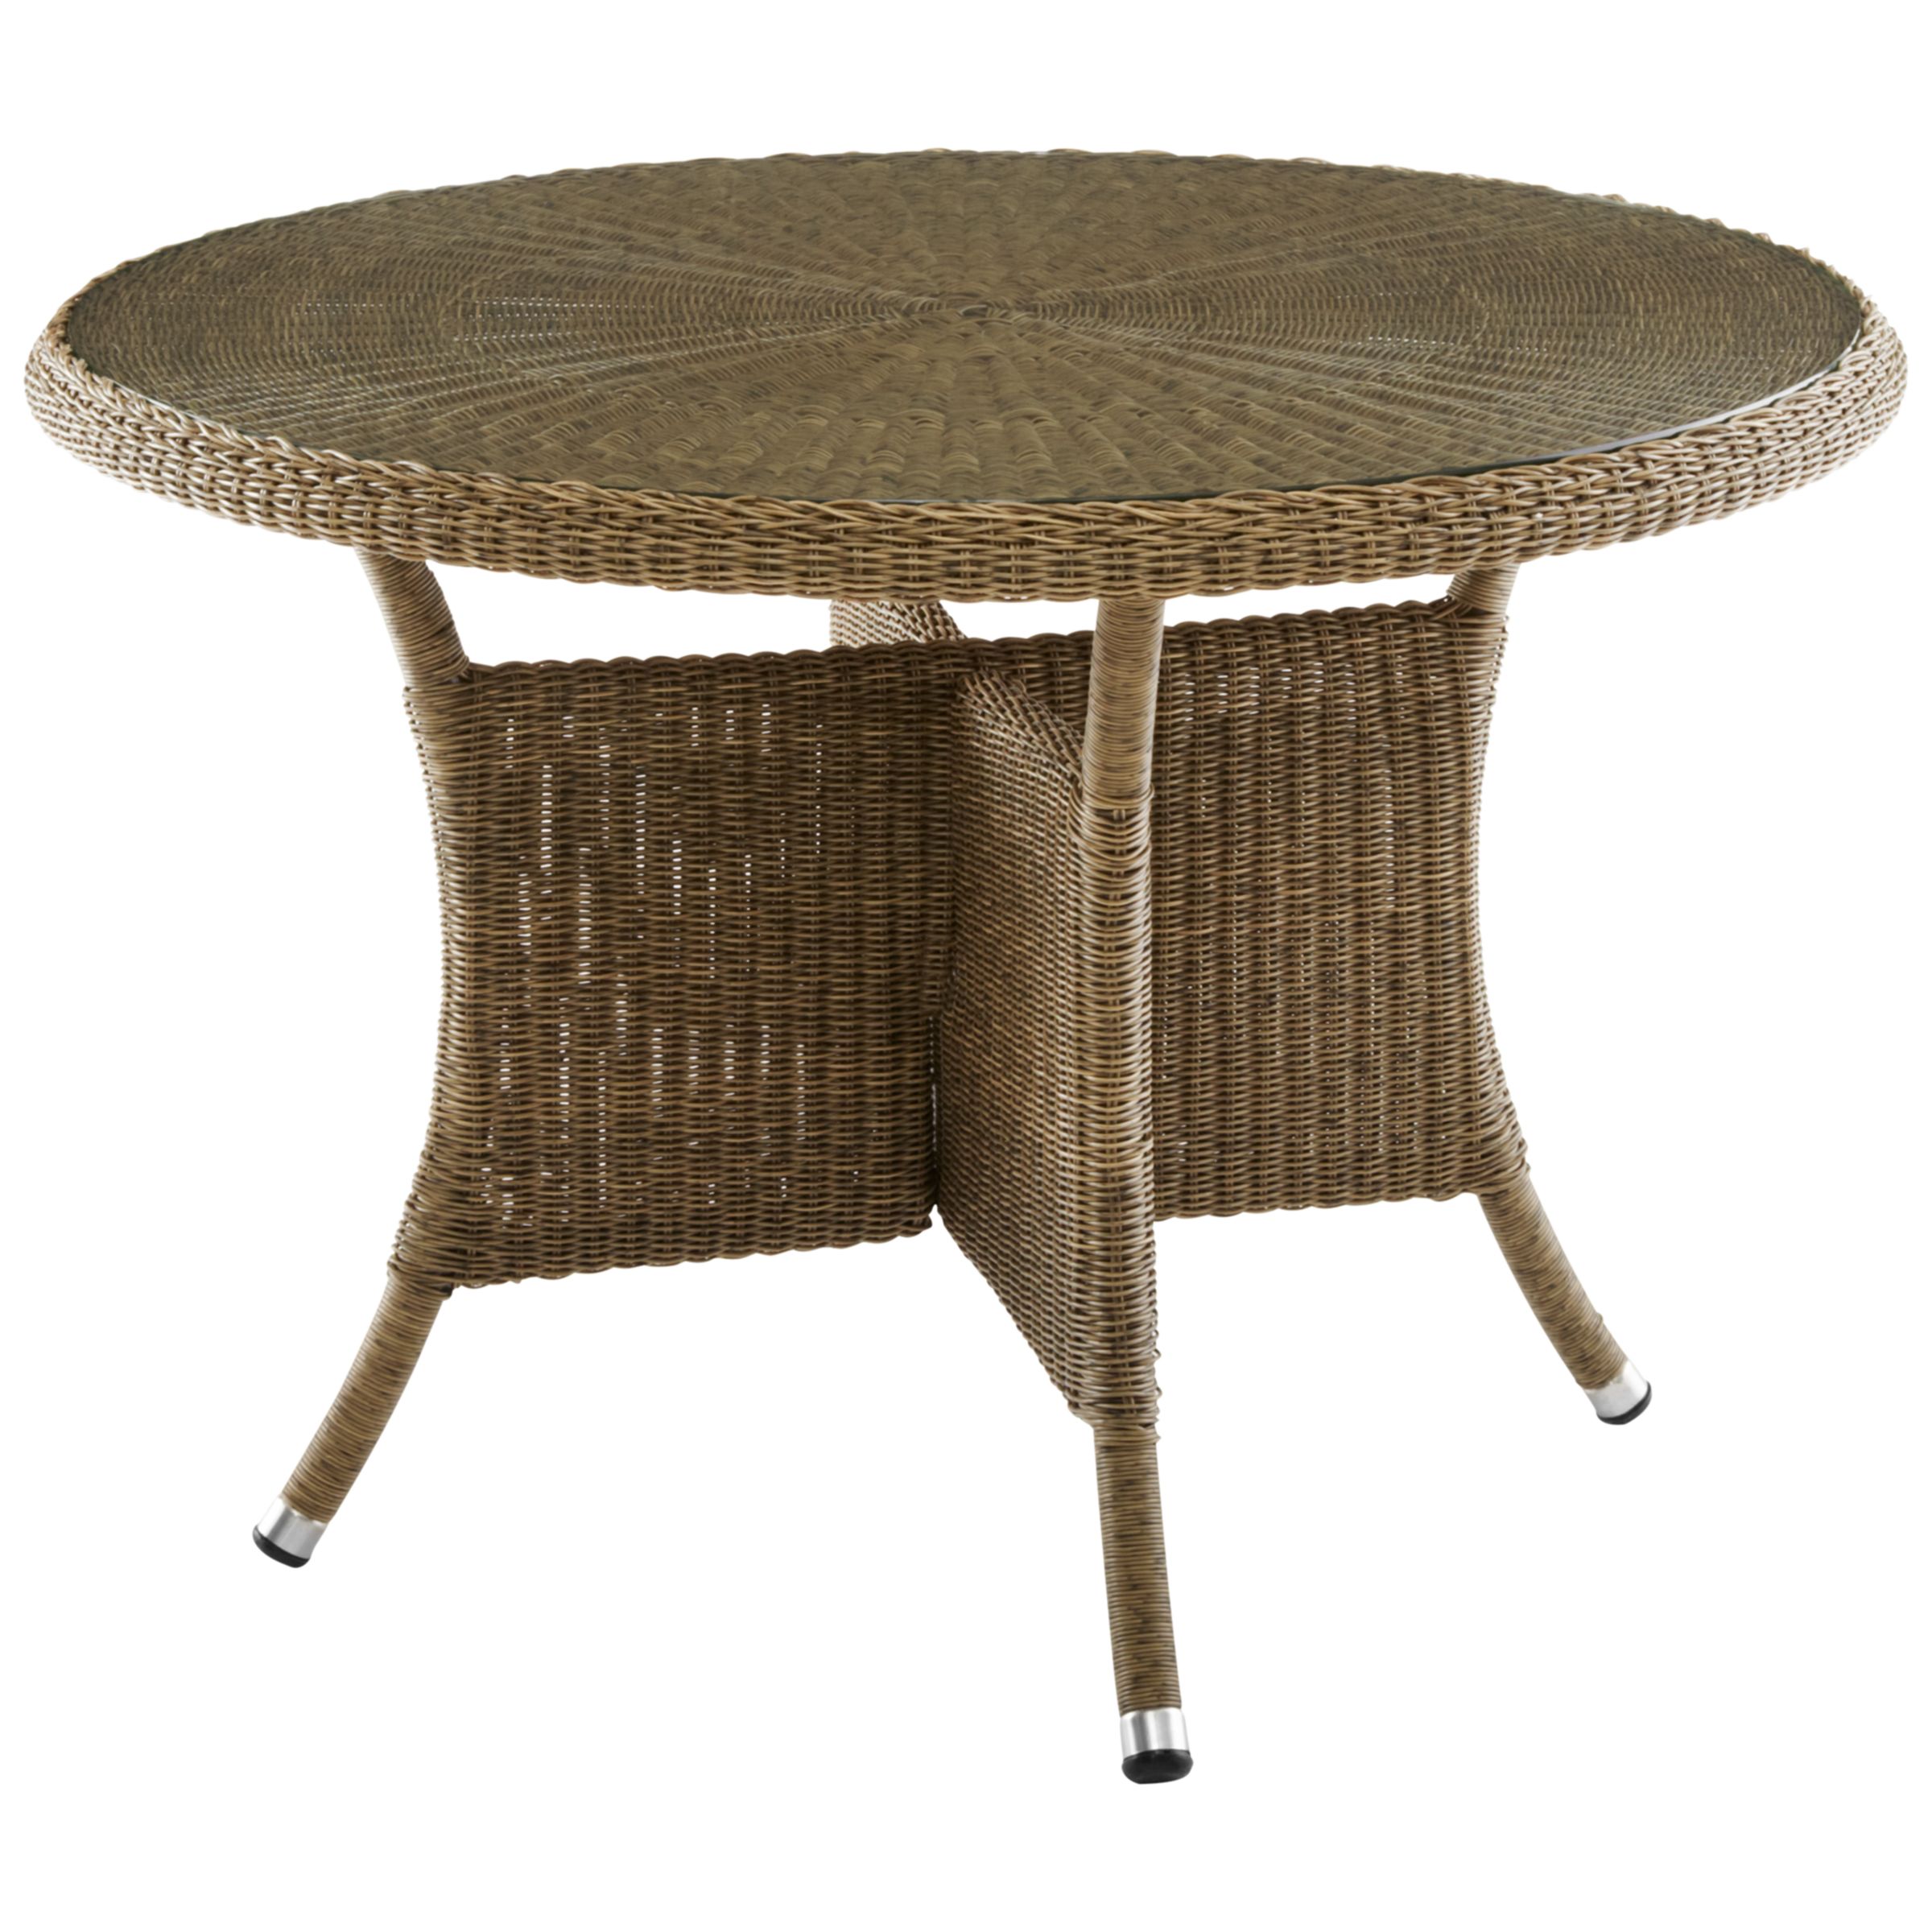 John Lewis Rimini 4 Seater Outdoor Dining Table, width 110cm